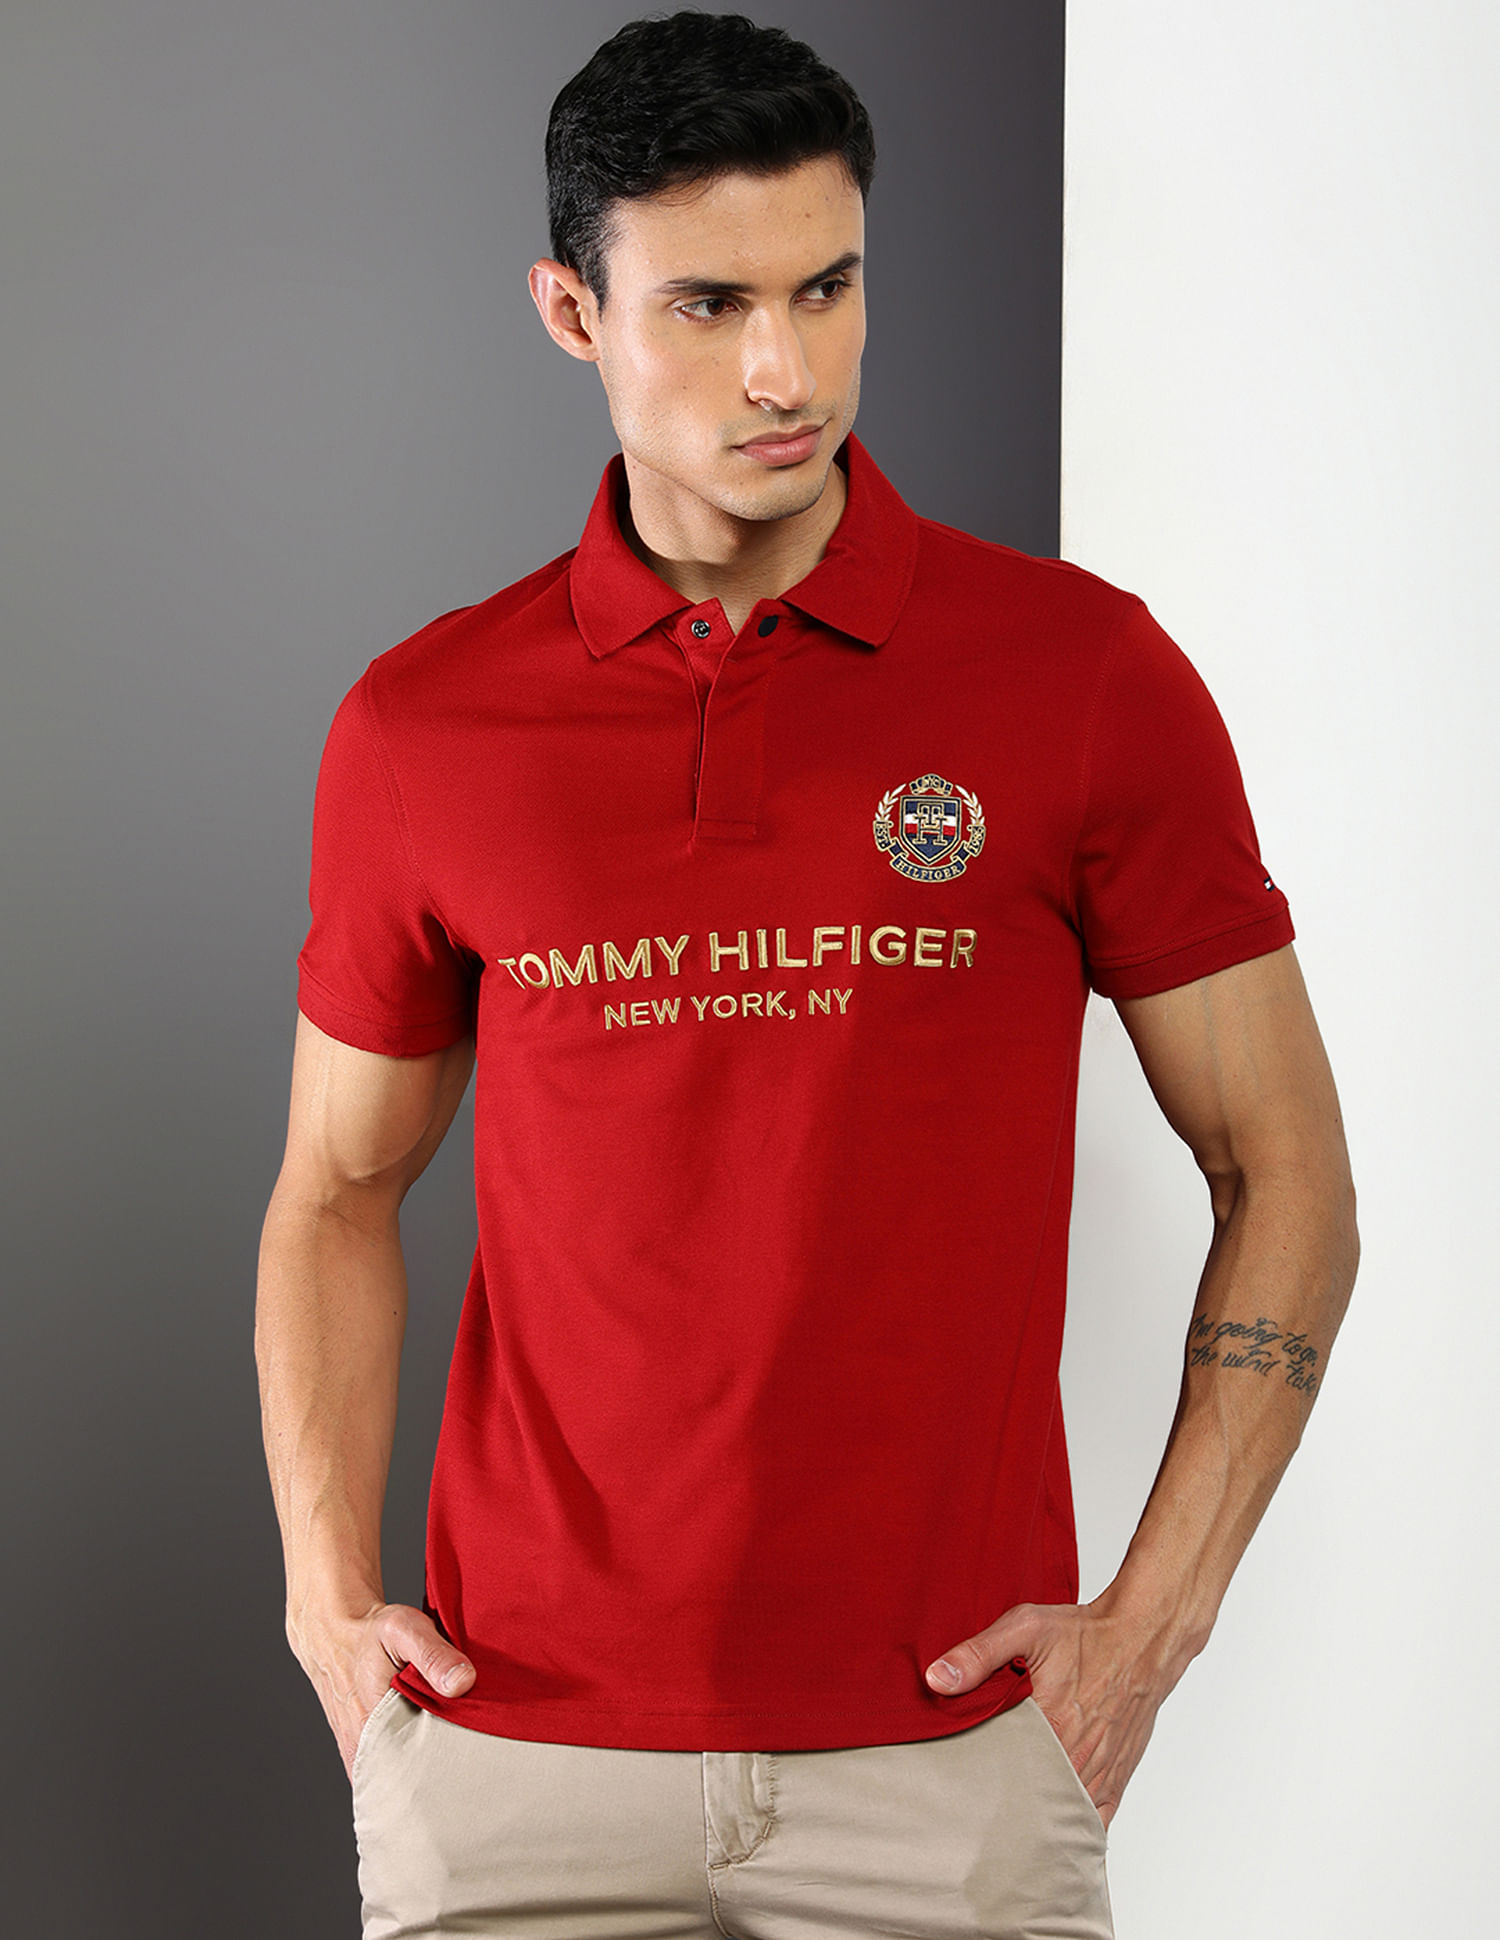 Crest Shirt Logo Hilfiger Tommy Polo Buy Fit Slim